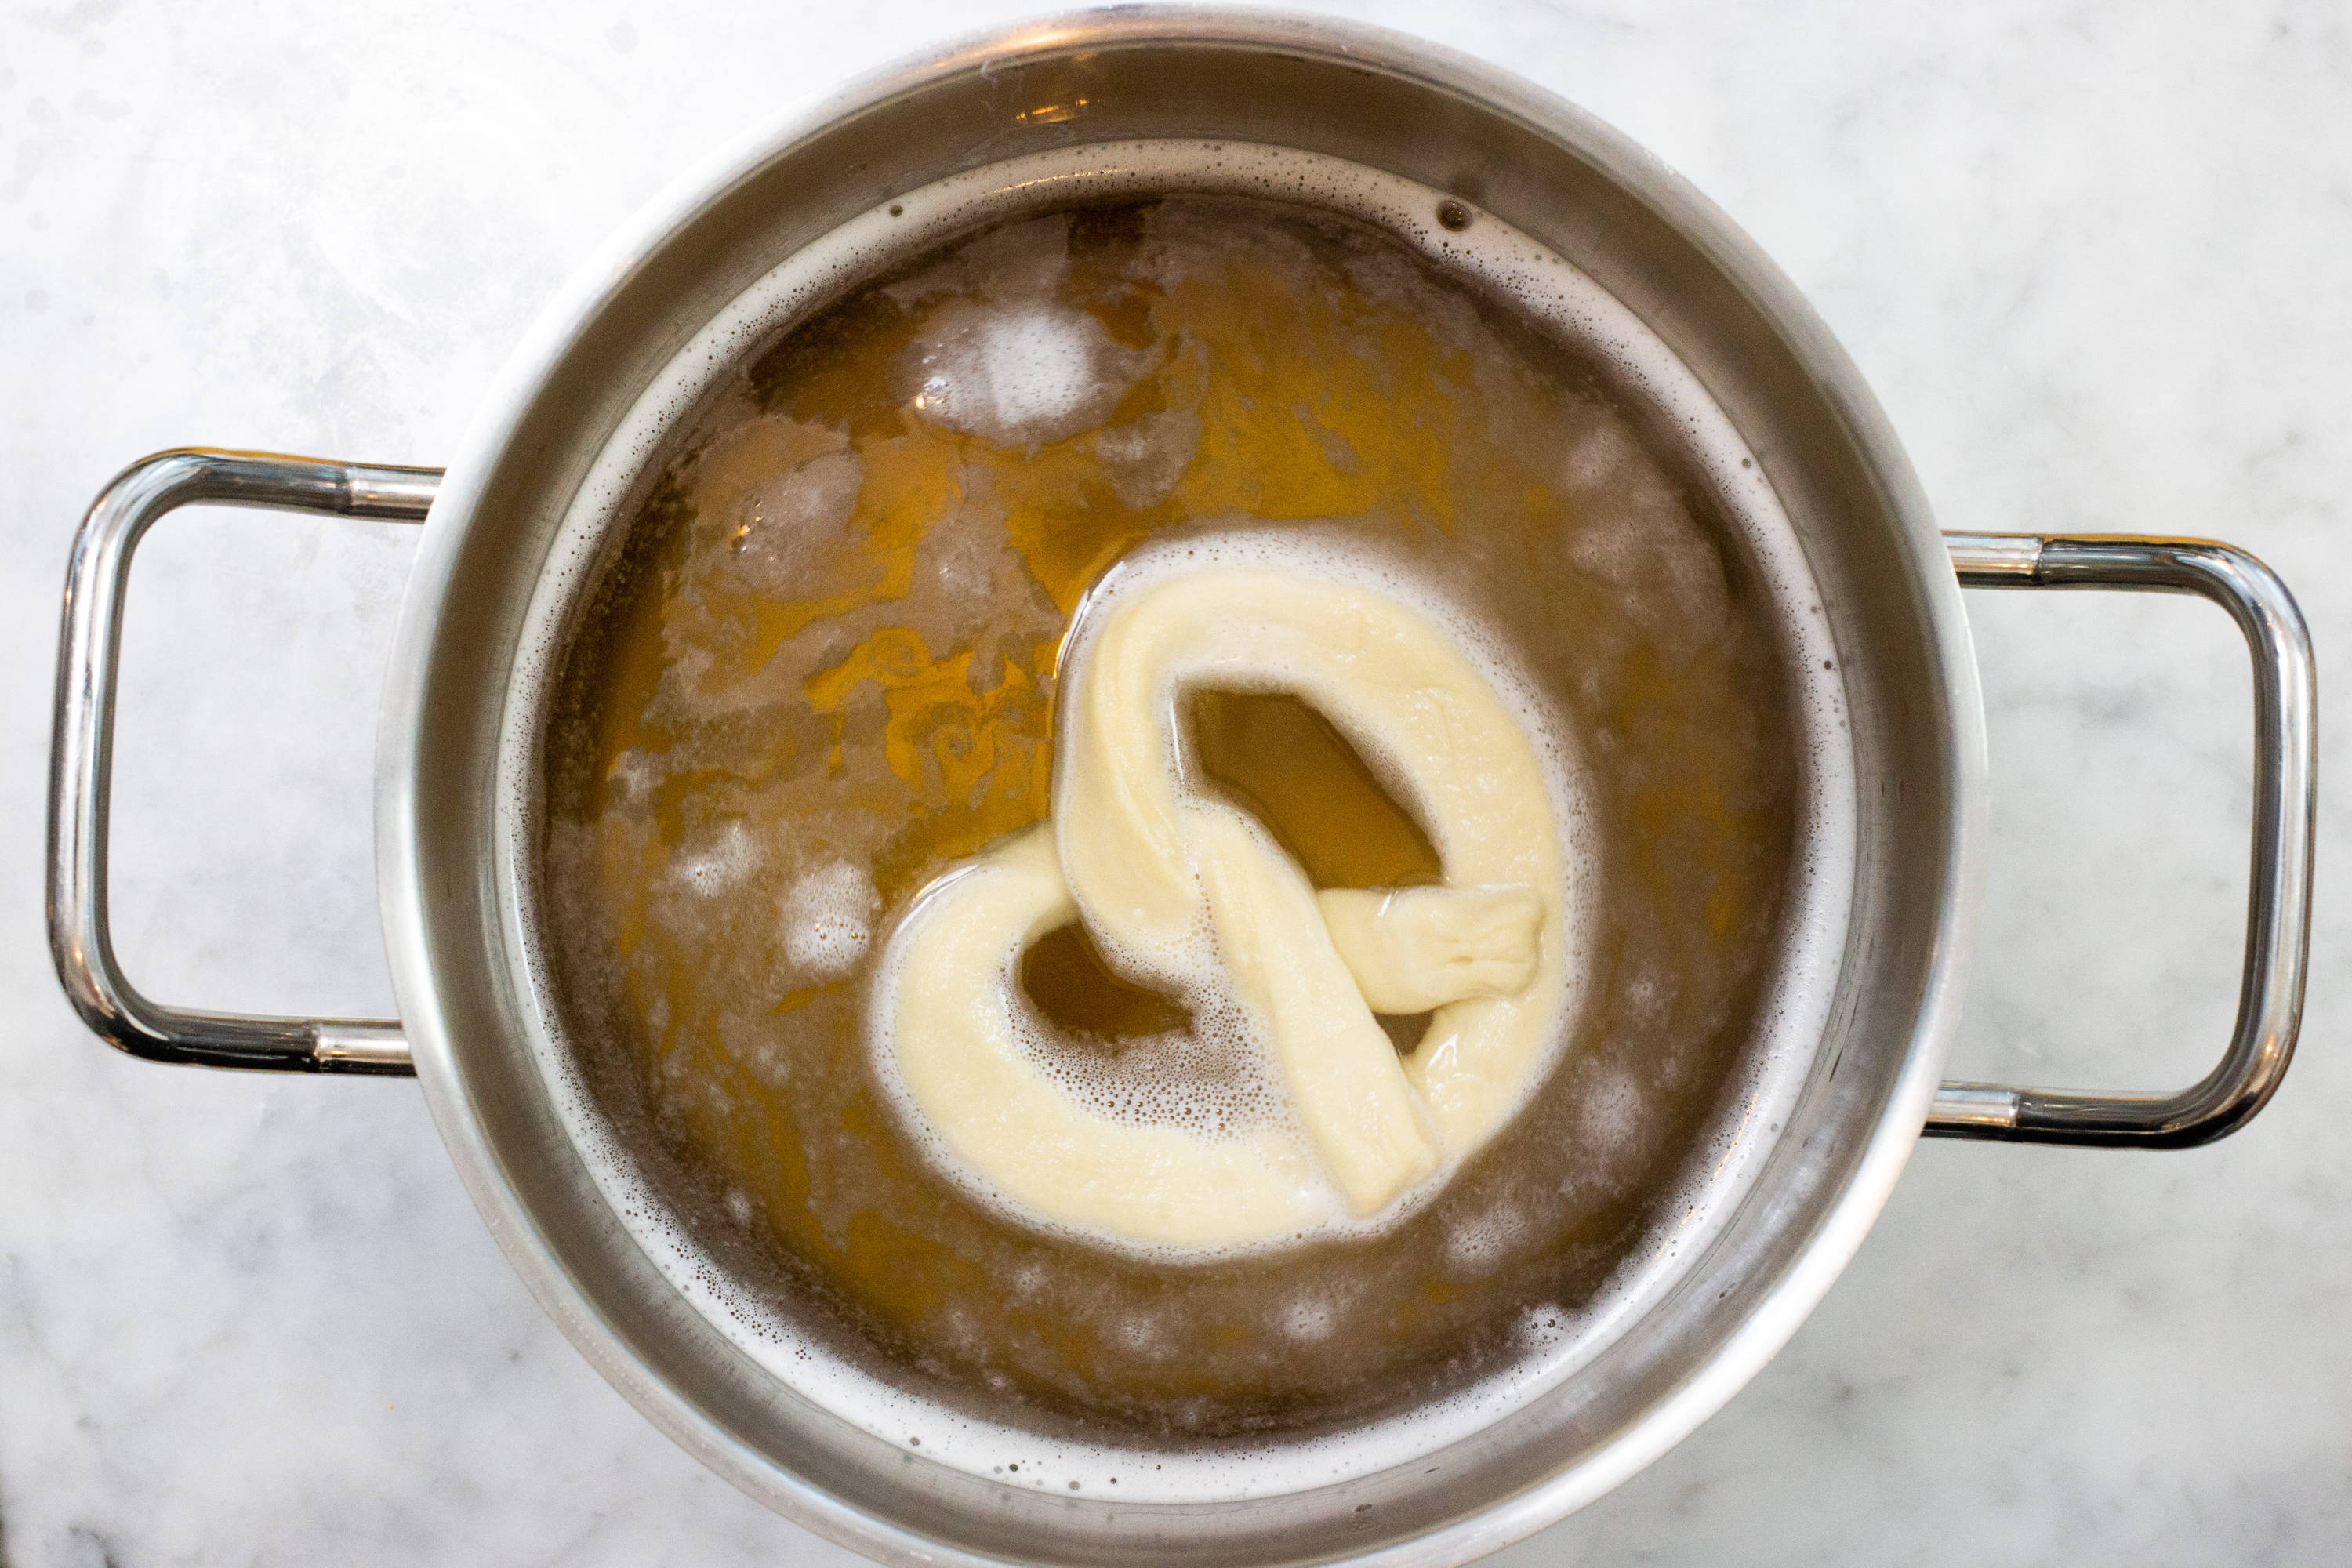 Boiling pretzel in hot water - How to make pretzels